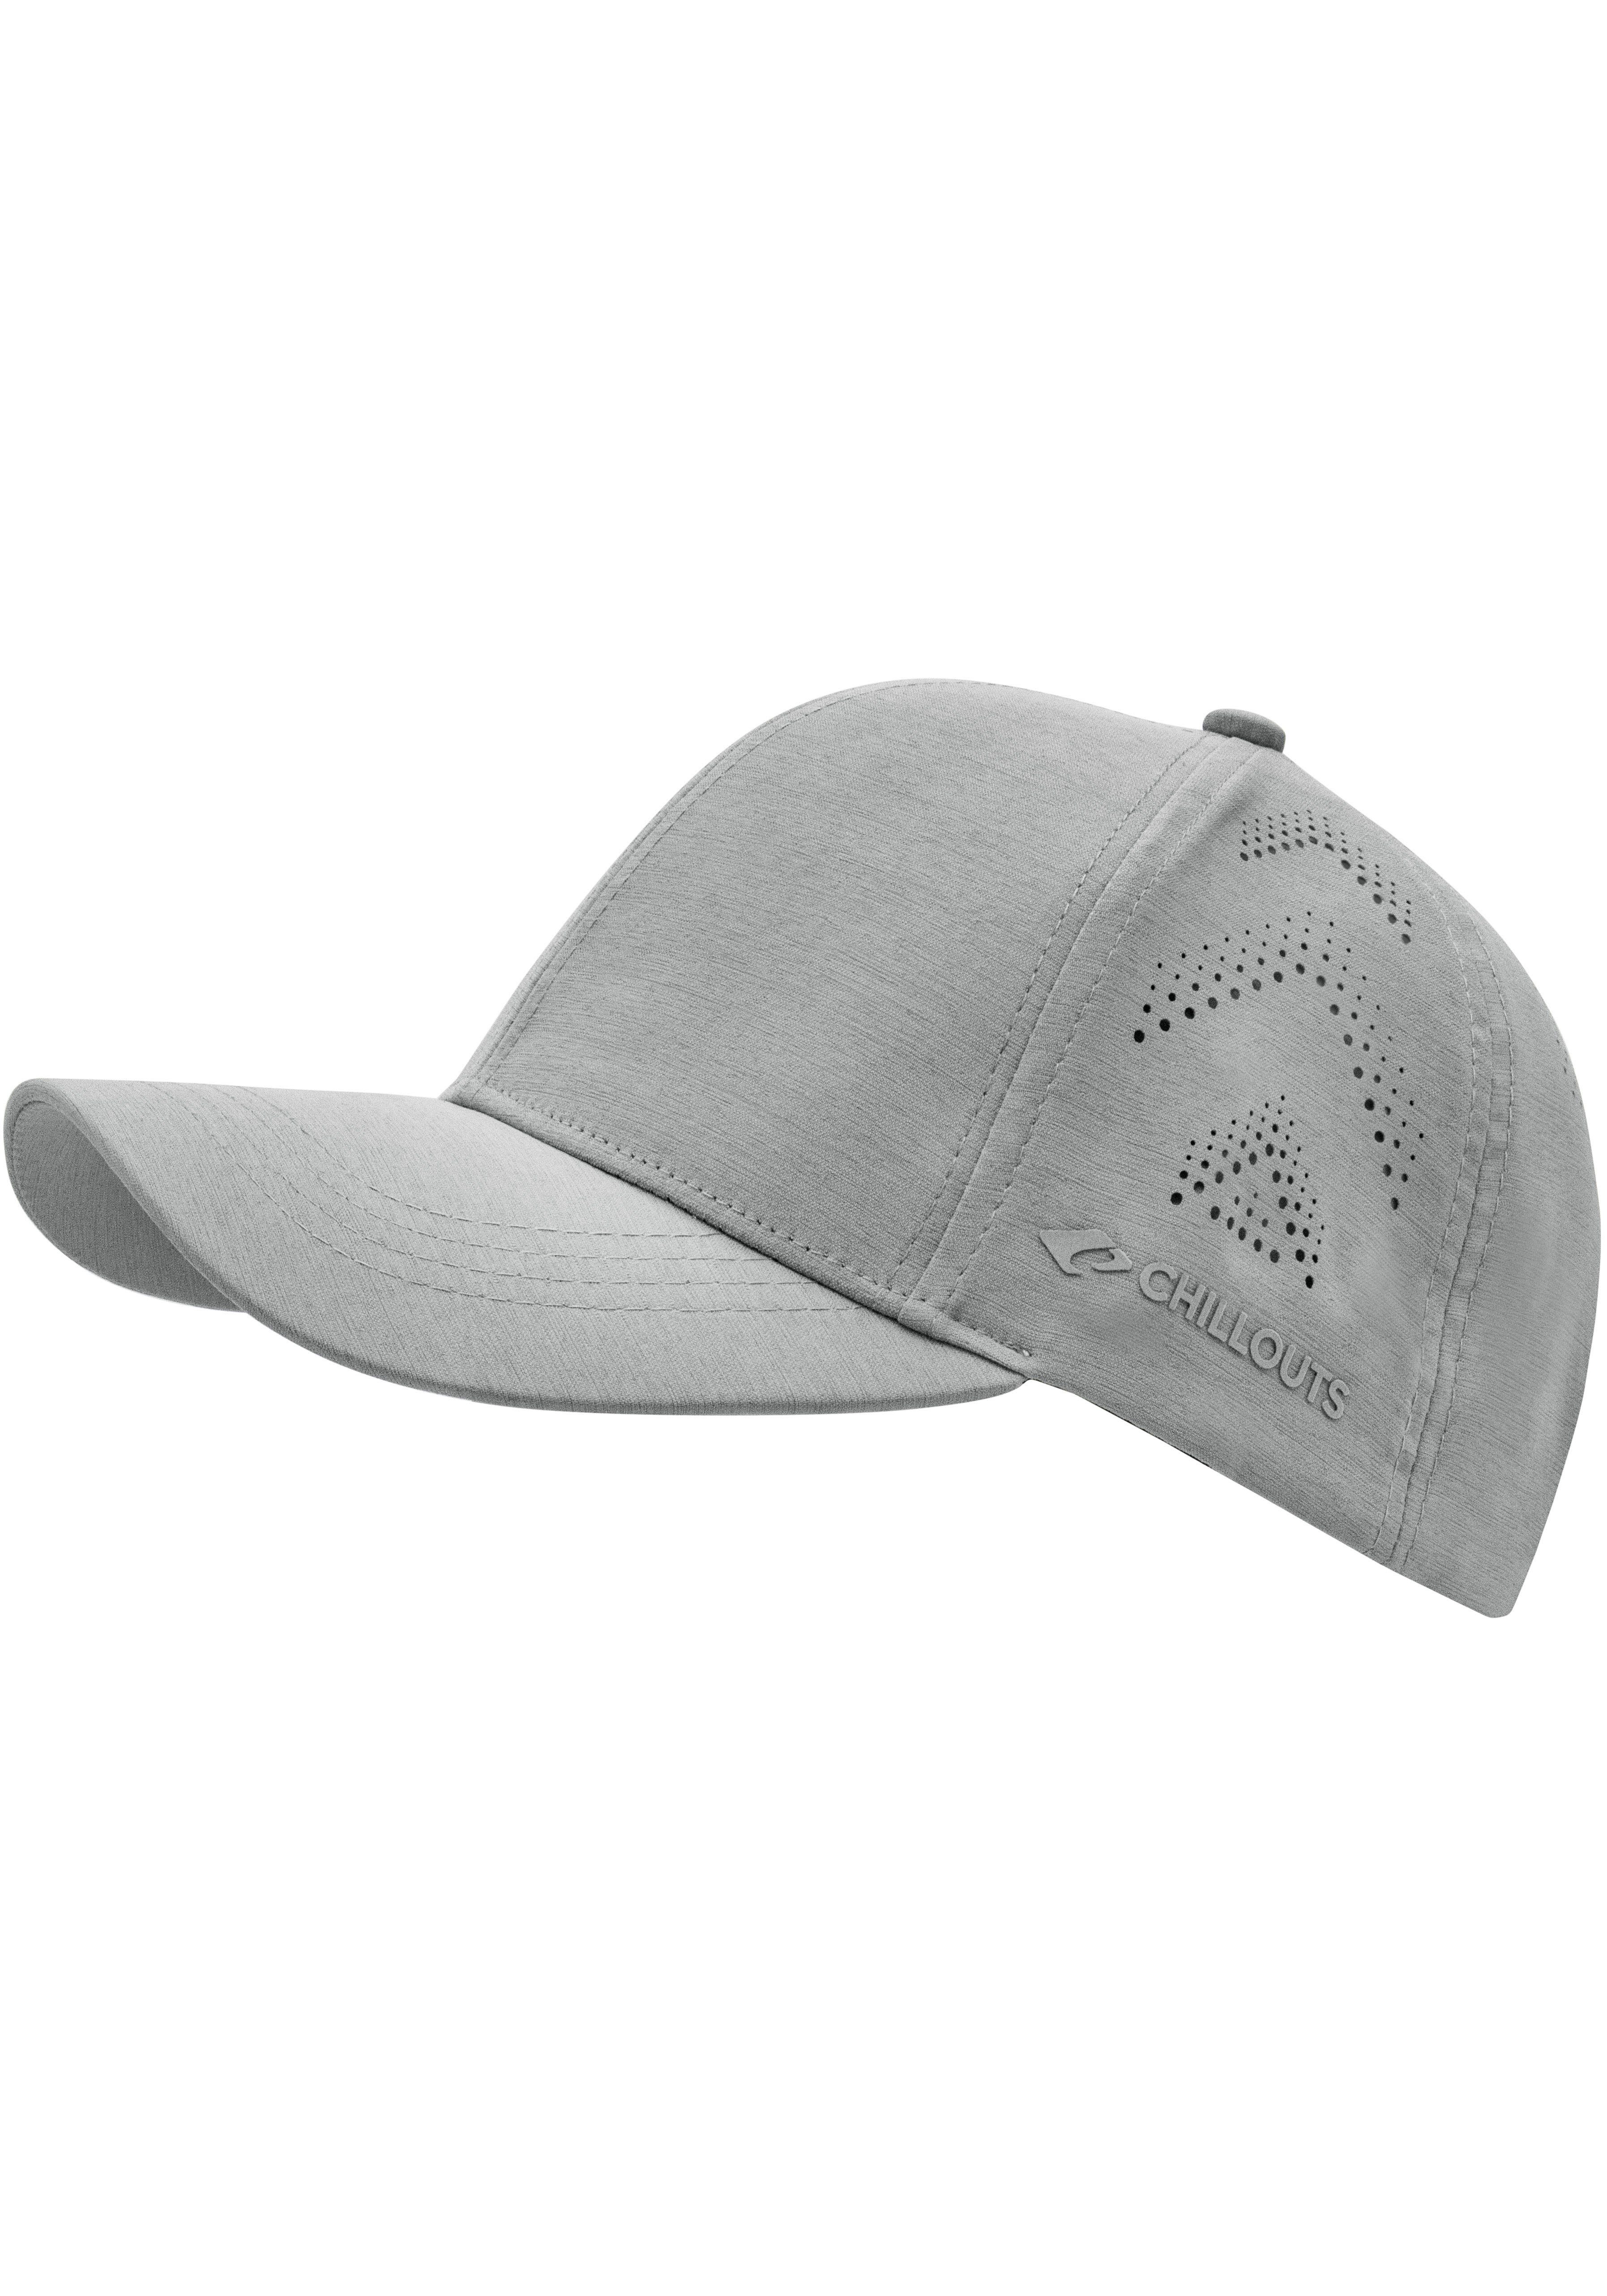 chillouts Baseball Cap Philadelphia Hat, Cap mit Klettverschluß, UPF50+ hellgrau